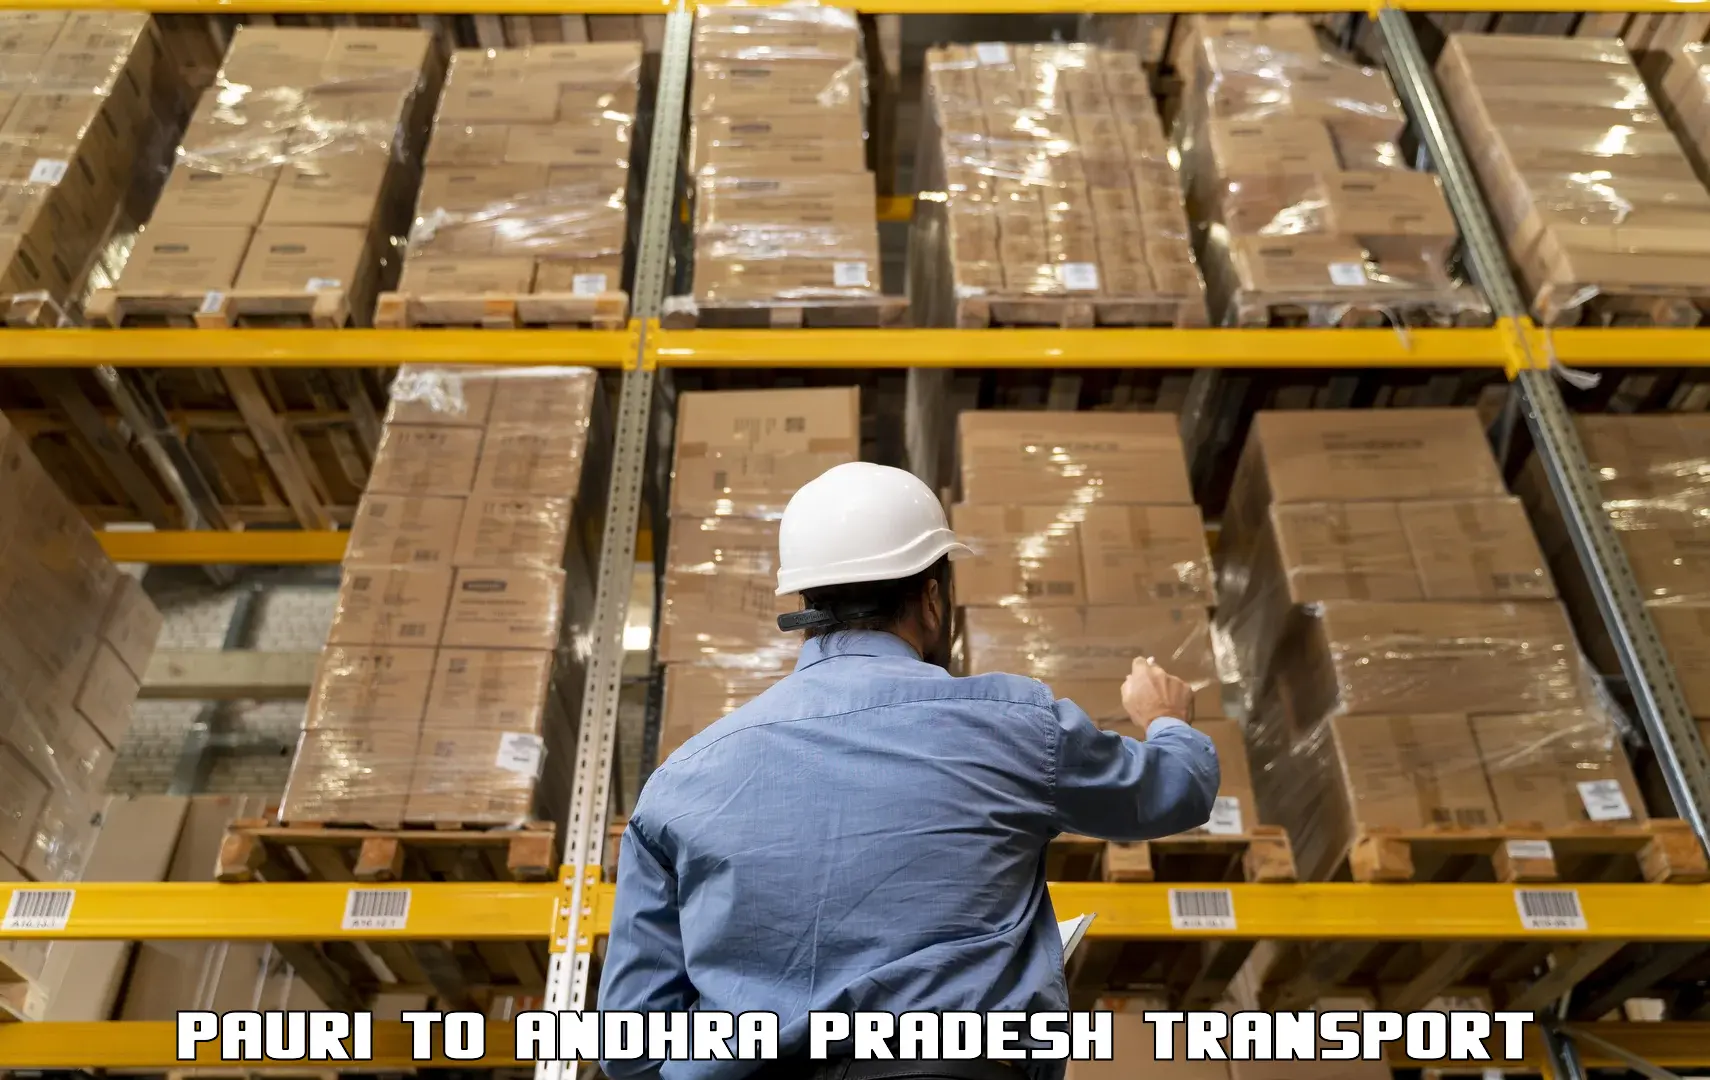 Truck transport companies in India Pauri to Etcherla